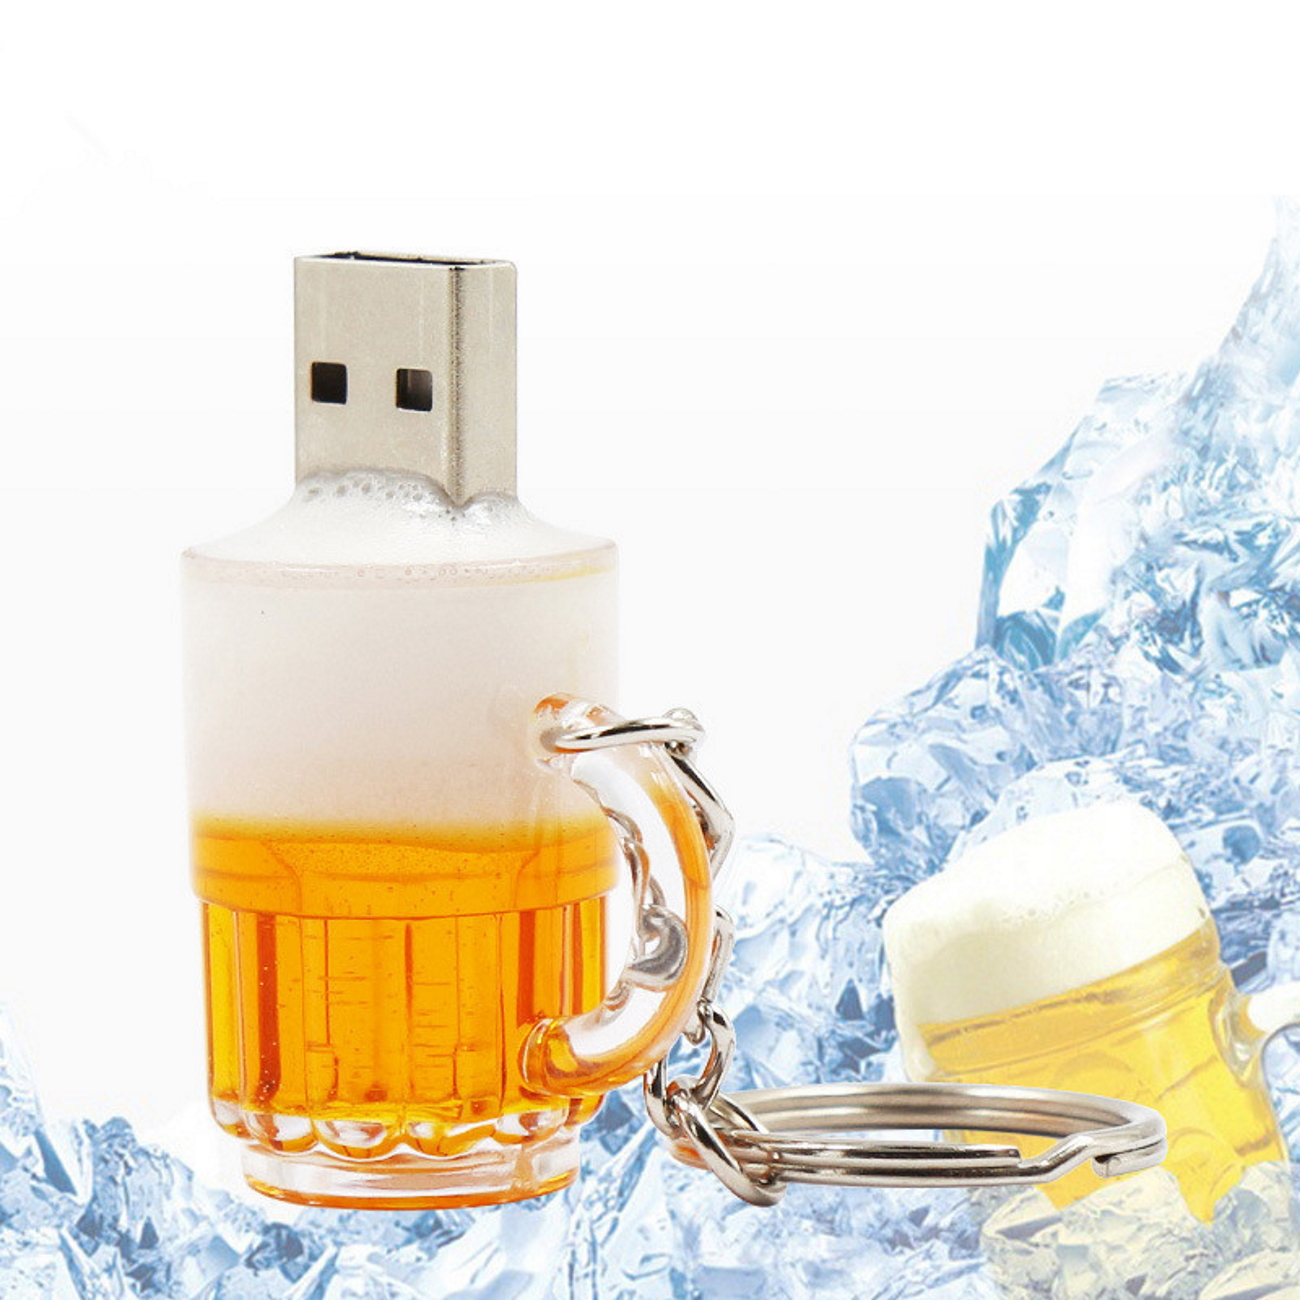 USB-Stick ® USB GERMANY Bierkrug GB) (Mehrfarbig, 1